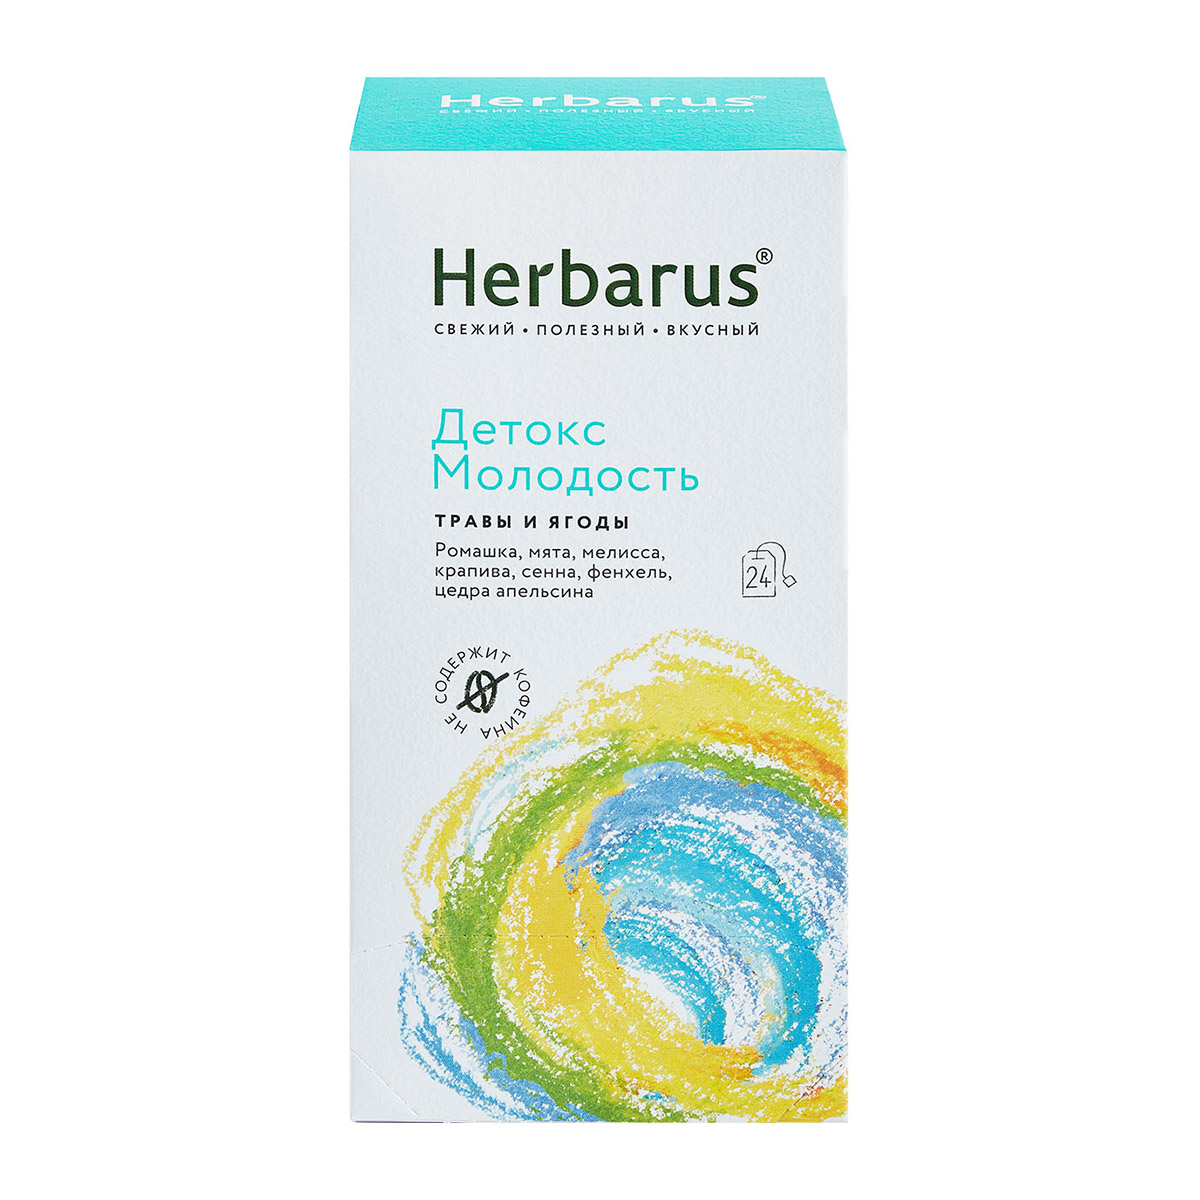 Herbarus Чайный напиток Детокс и молодость, 24 х 1,8 г (Herbarus, Травы и ягоды) чайный напиток herbarus заряд витаминов 50 г